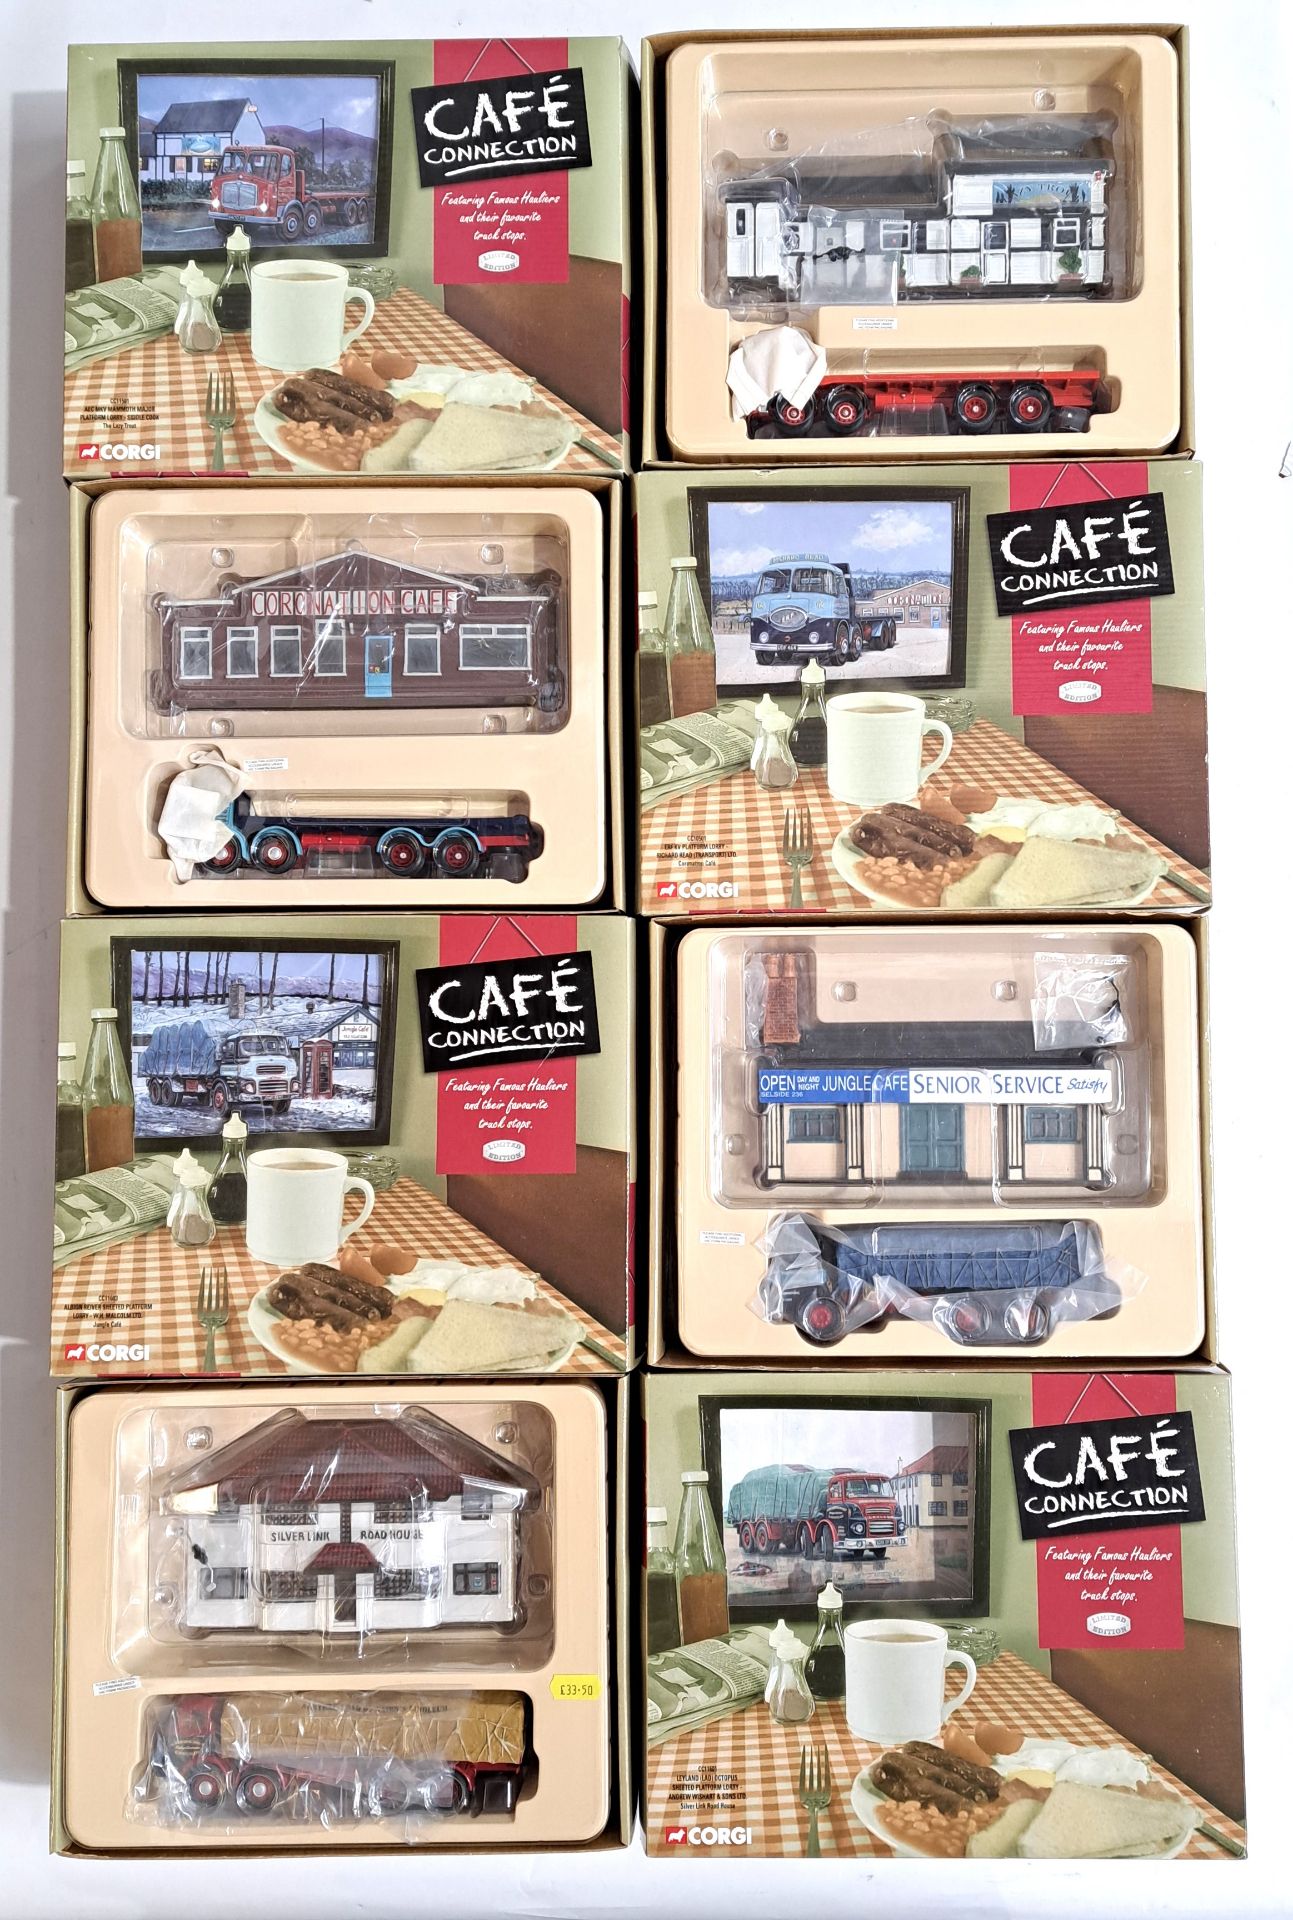 Corgi, a boxed group "Cafe Connection" Diorama Sets